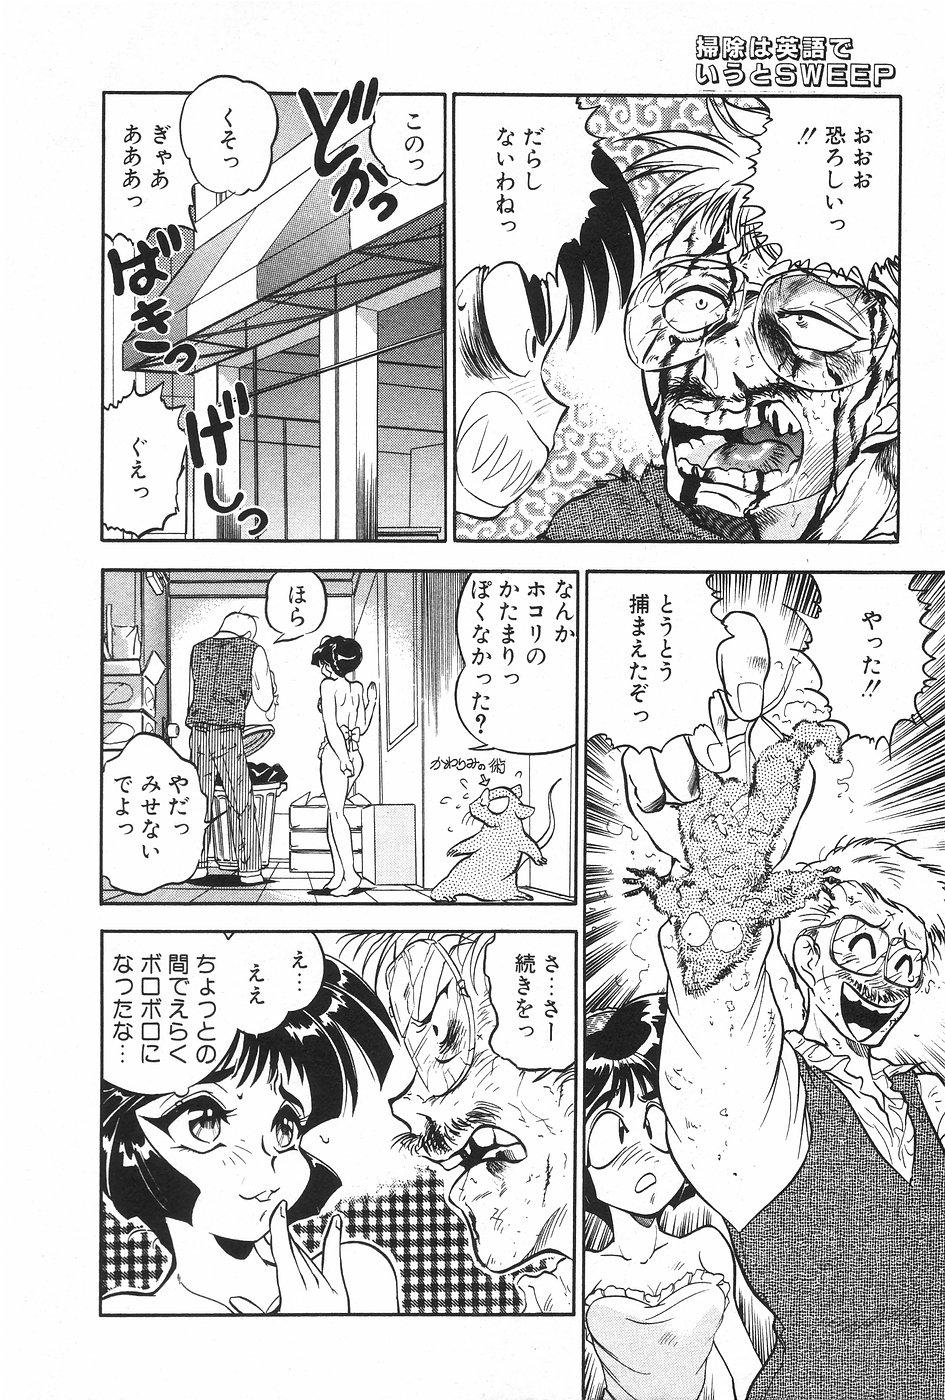 Manga Hotmilk 1997-04 124